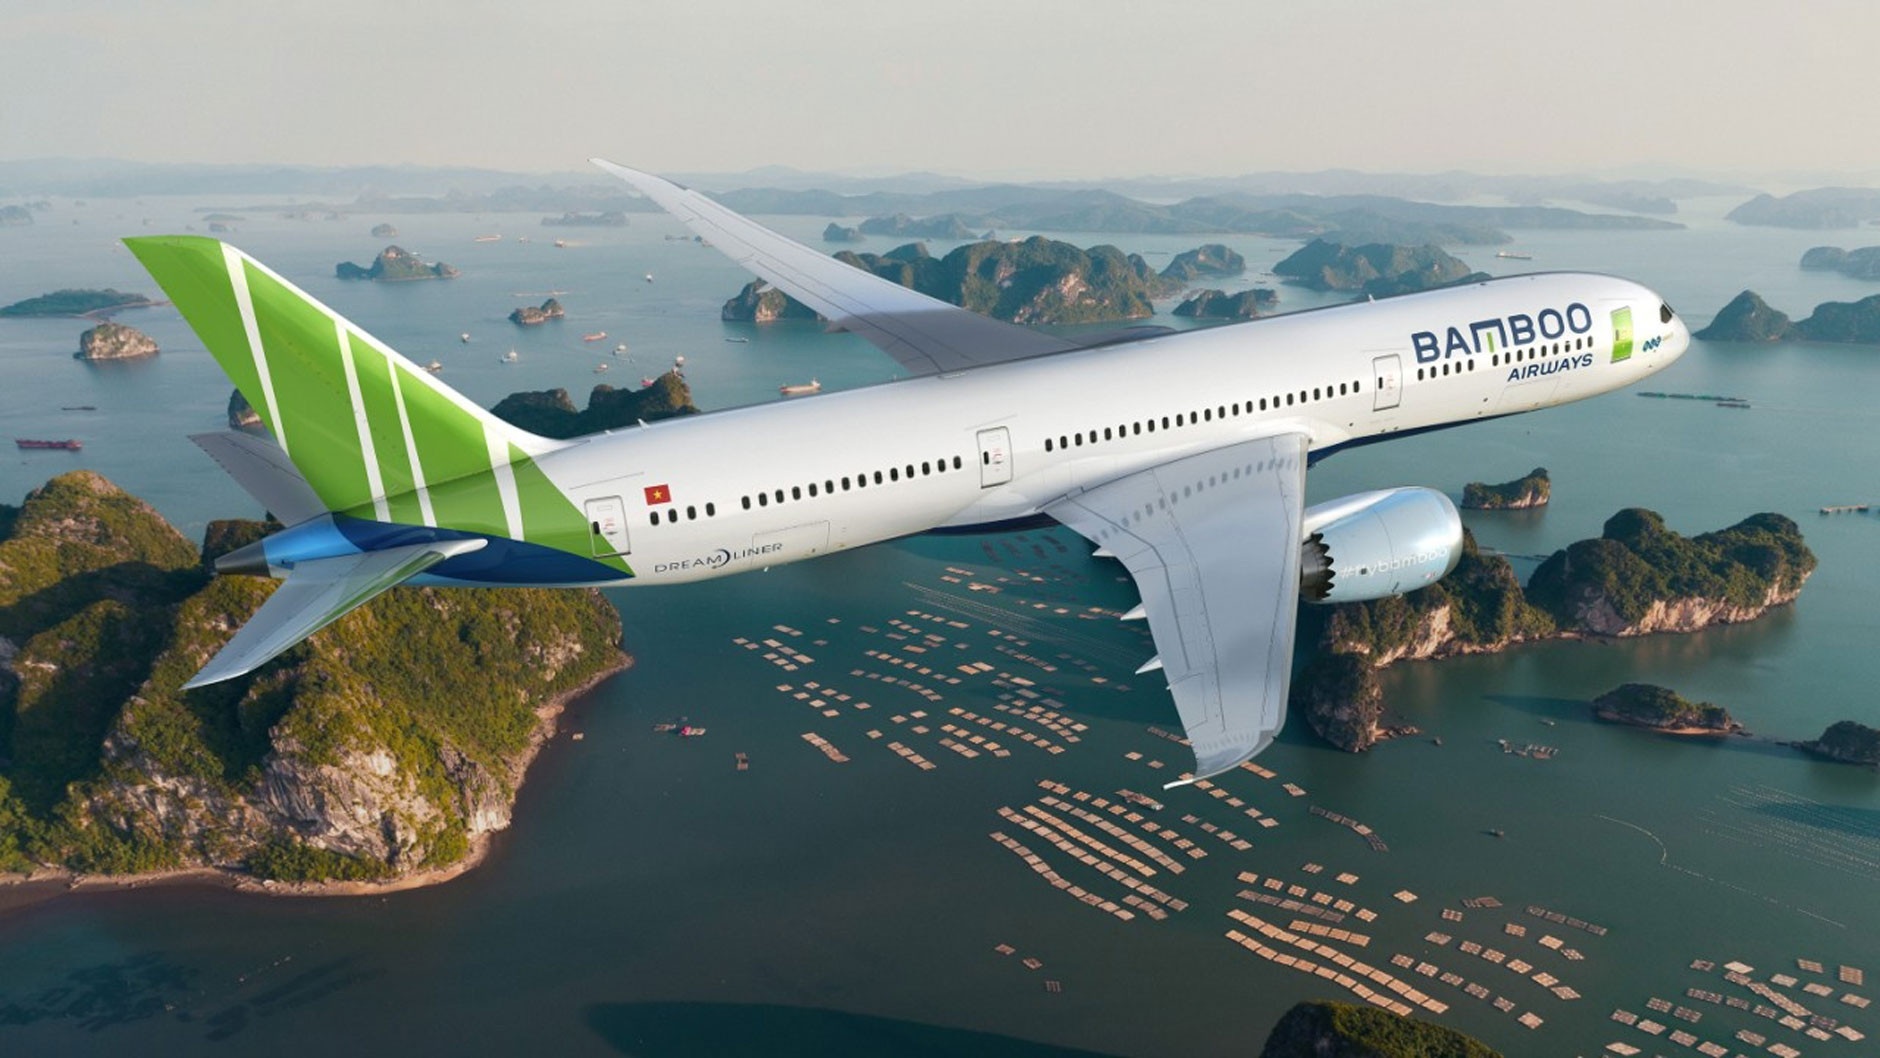 30 pilots depart from Bamboo Airways